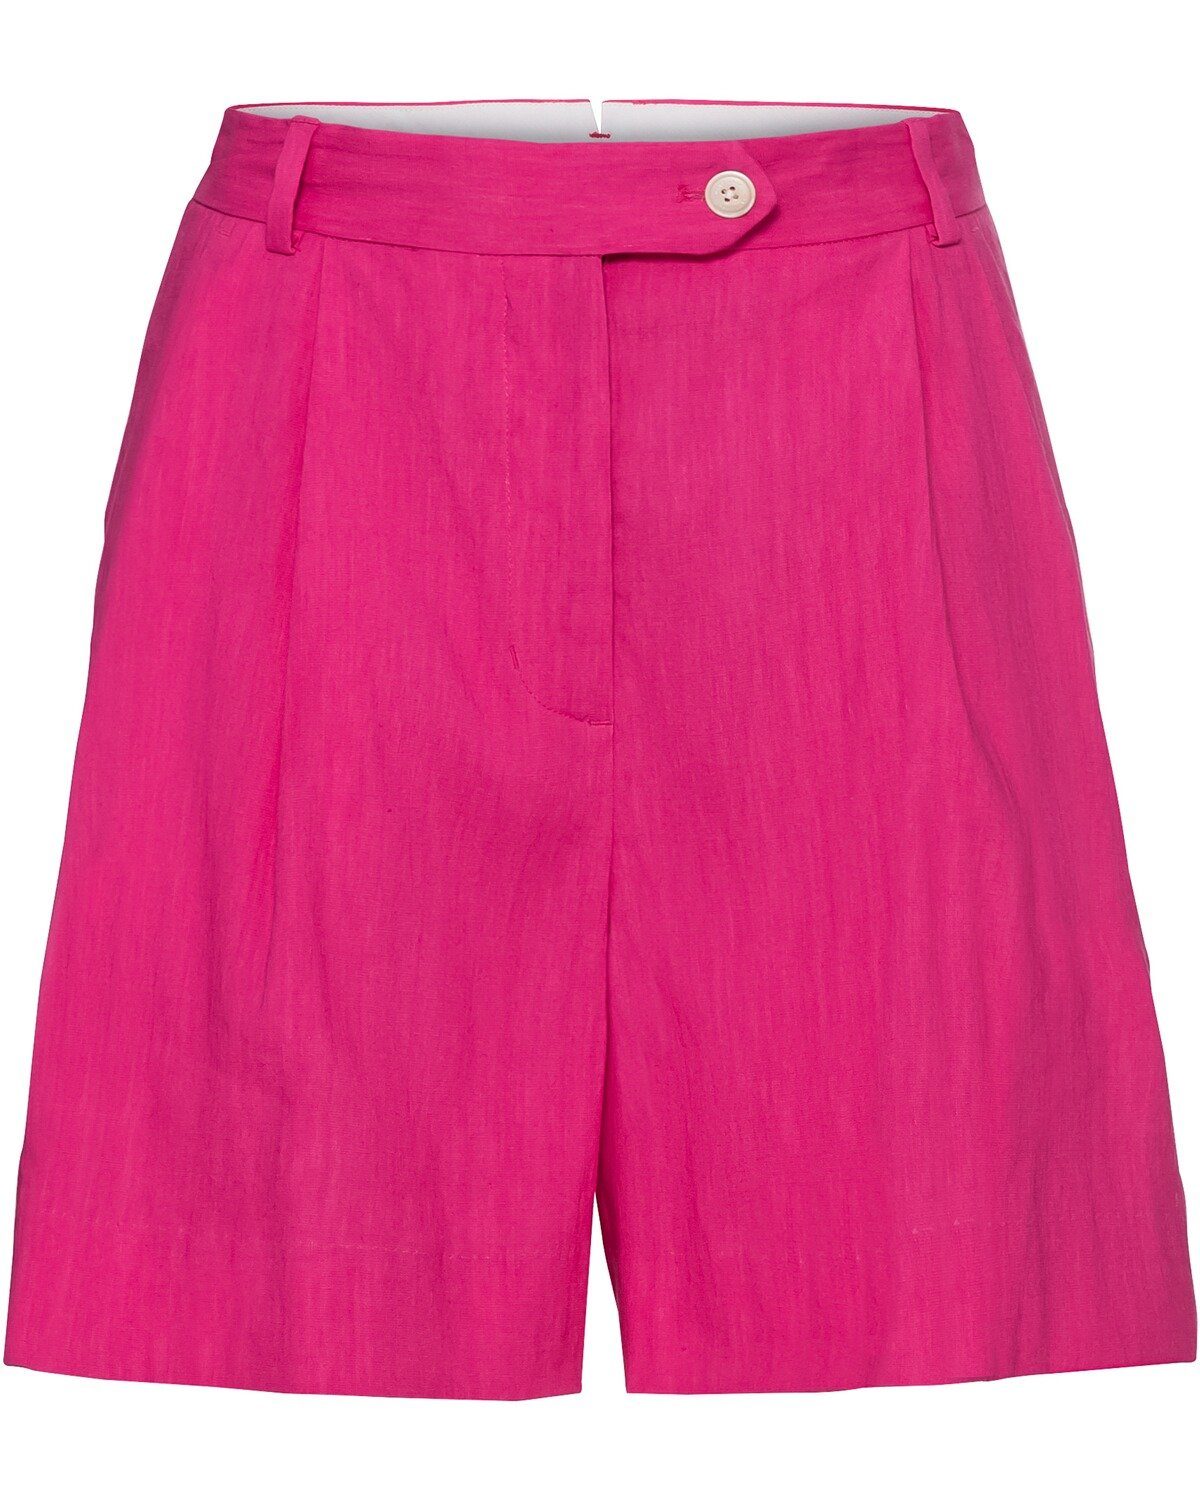 Gant Shorts Shorts Pink